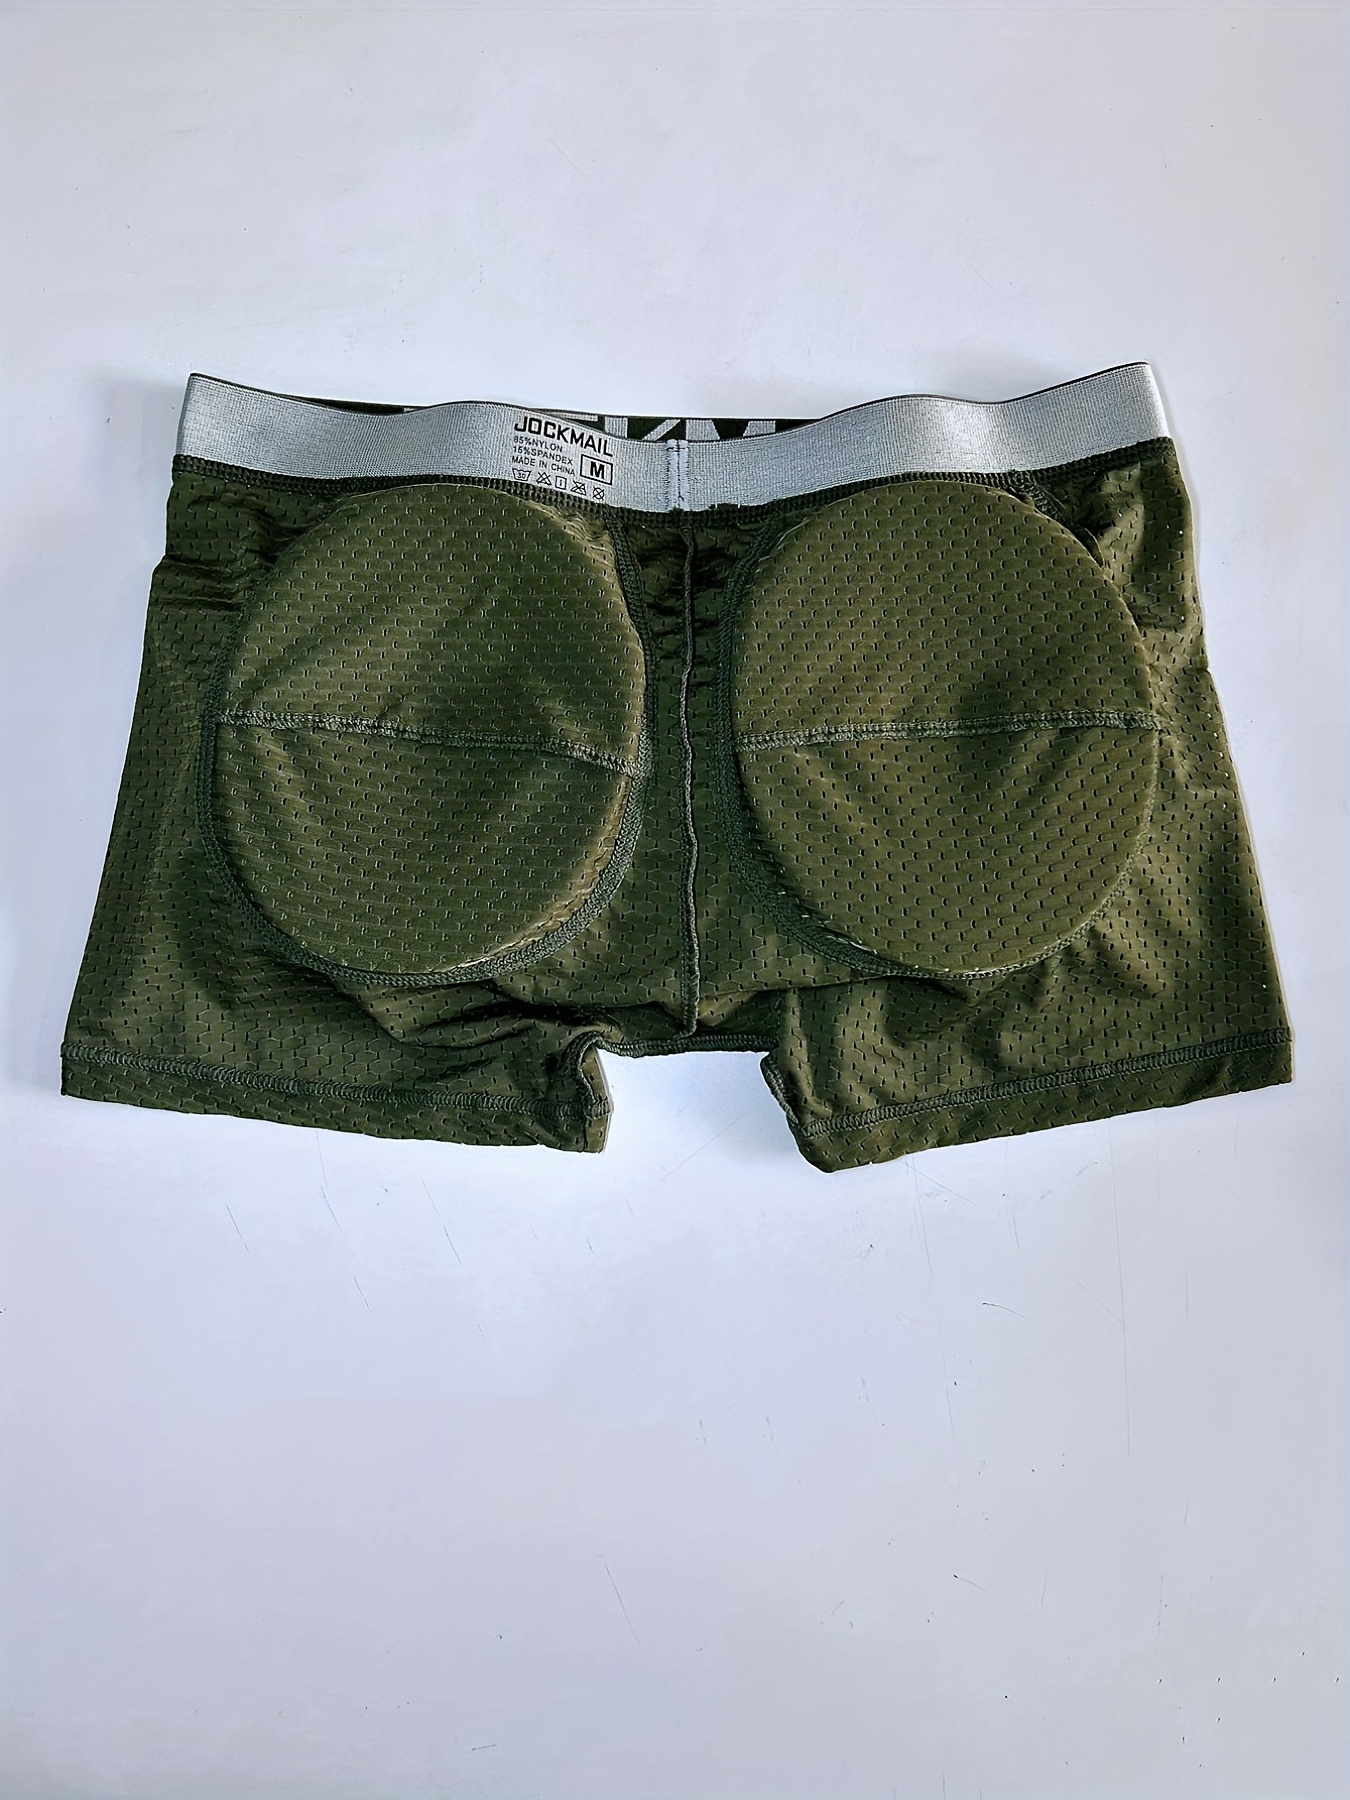 Stylish breathable men's briefs naked butt men in sexy underwear factory  direct sale IM3-12 - AliExpress